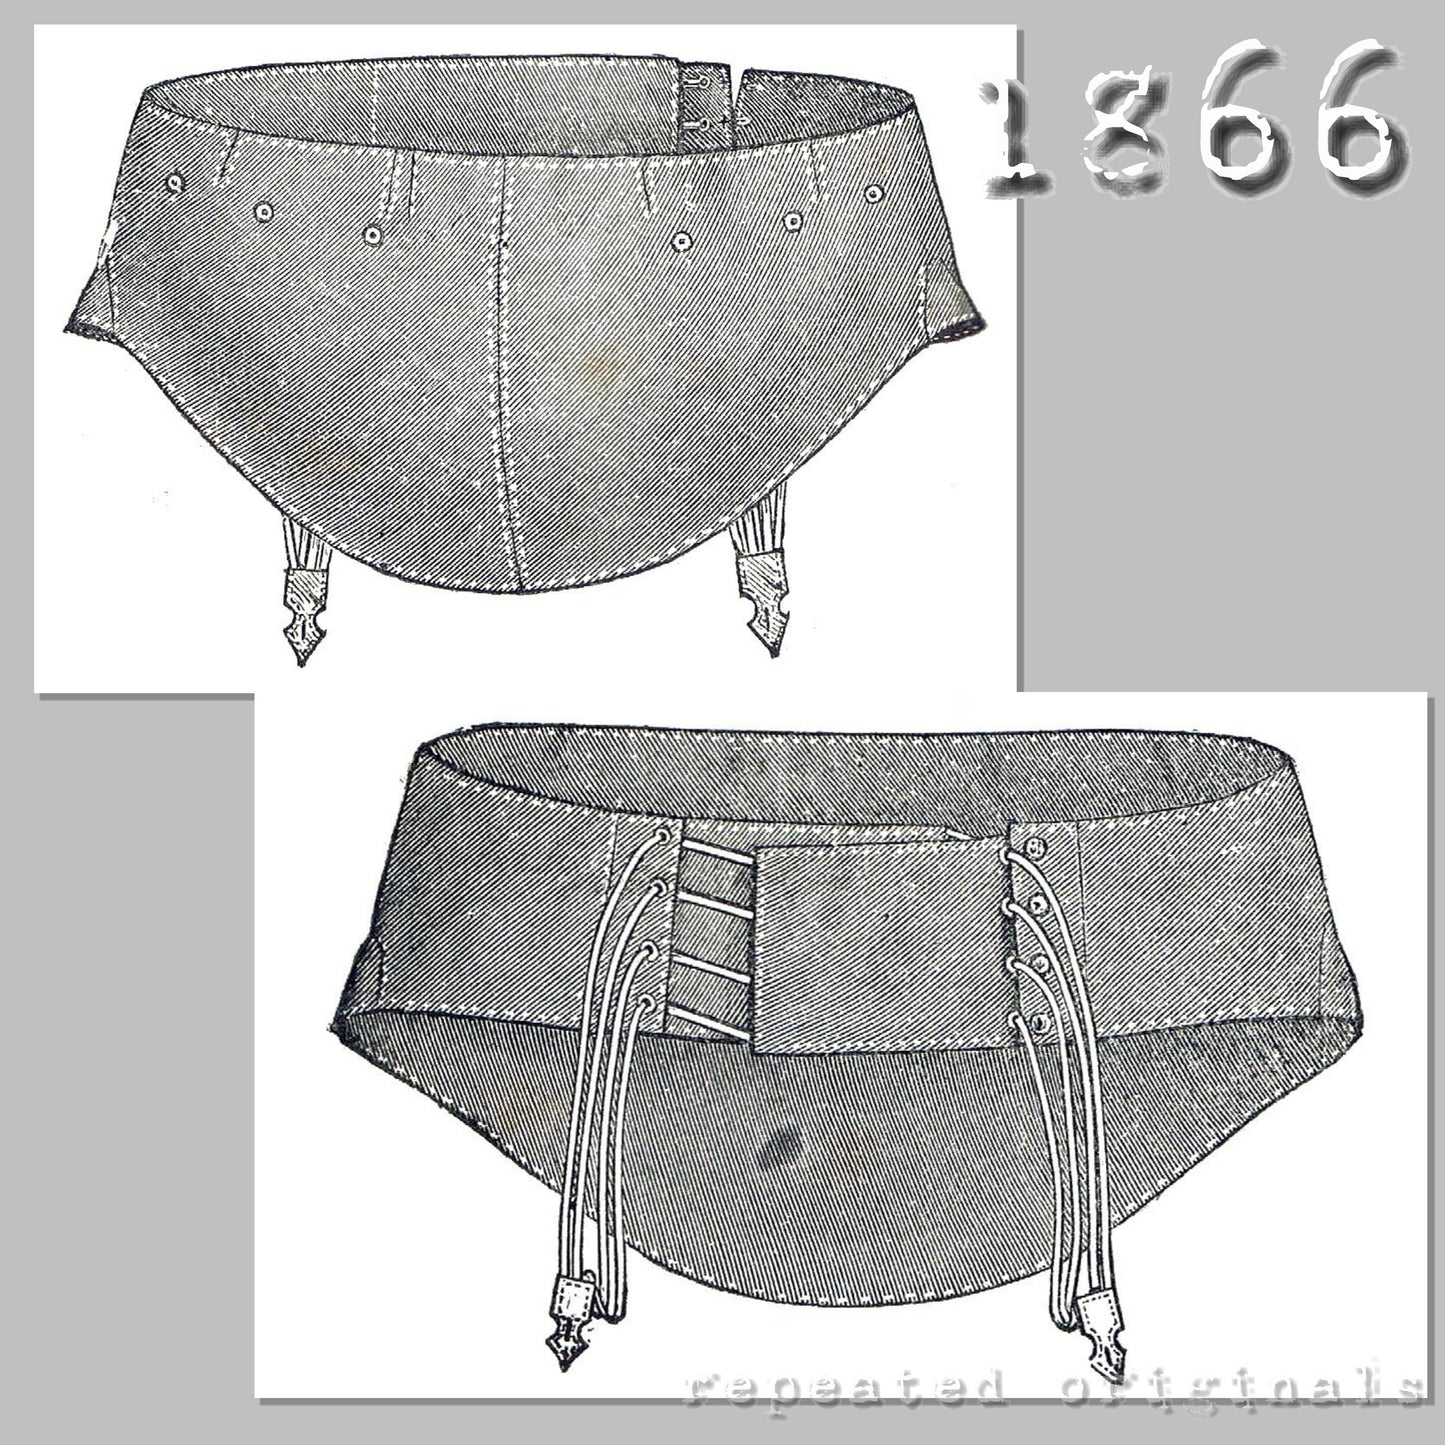 1866 Waist Belt for Women Sewing Pattern - INSTANT DOWNLOAD PDF